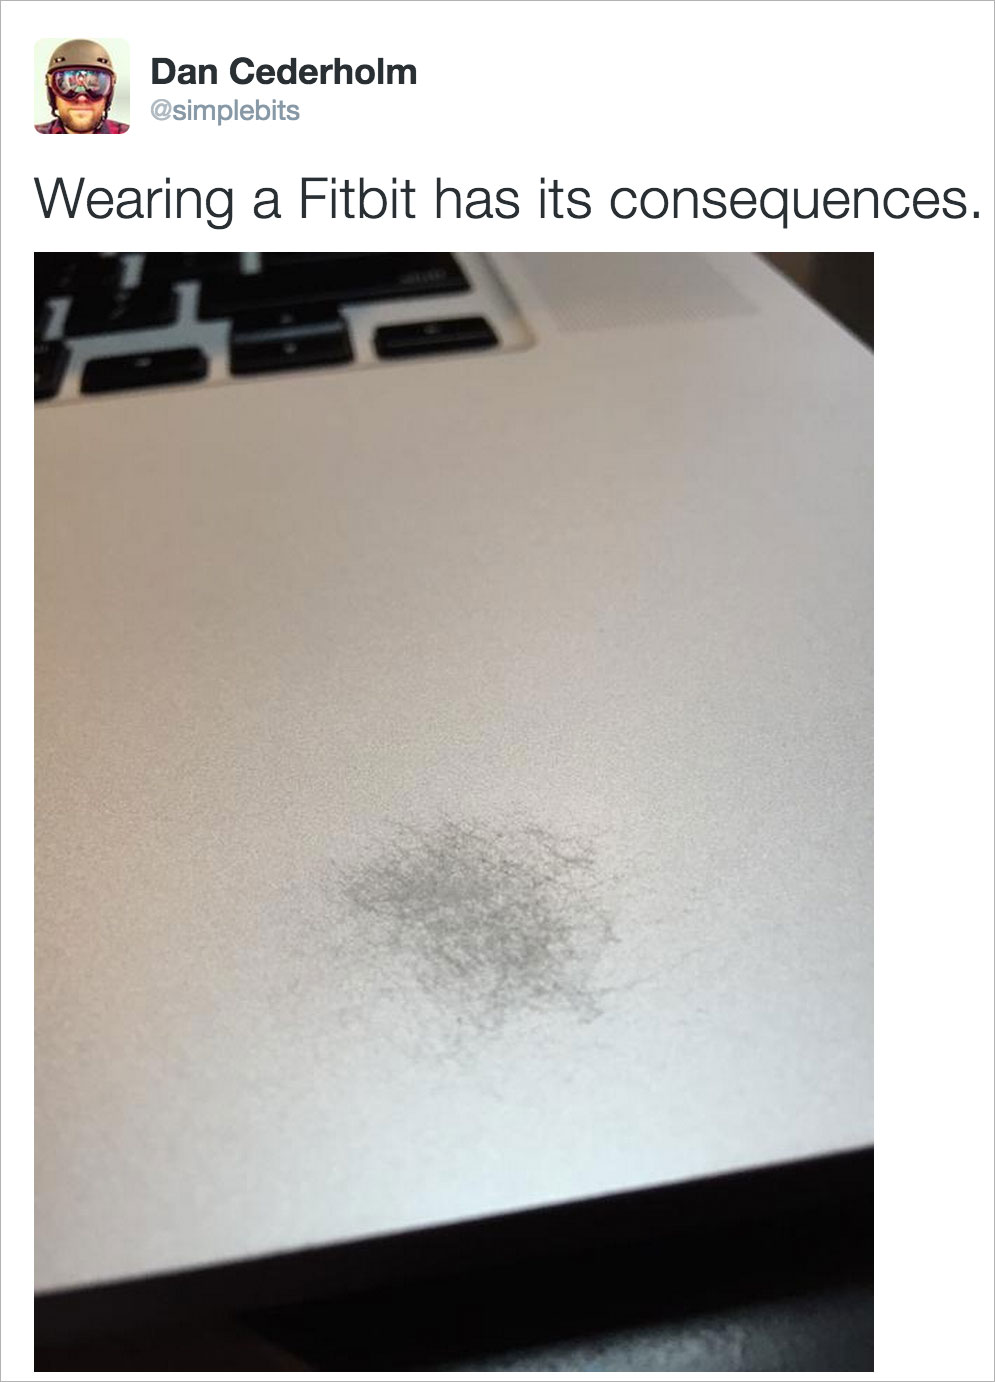 Fitbit scratches Dan Cederholm's laptop